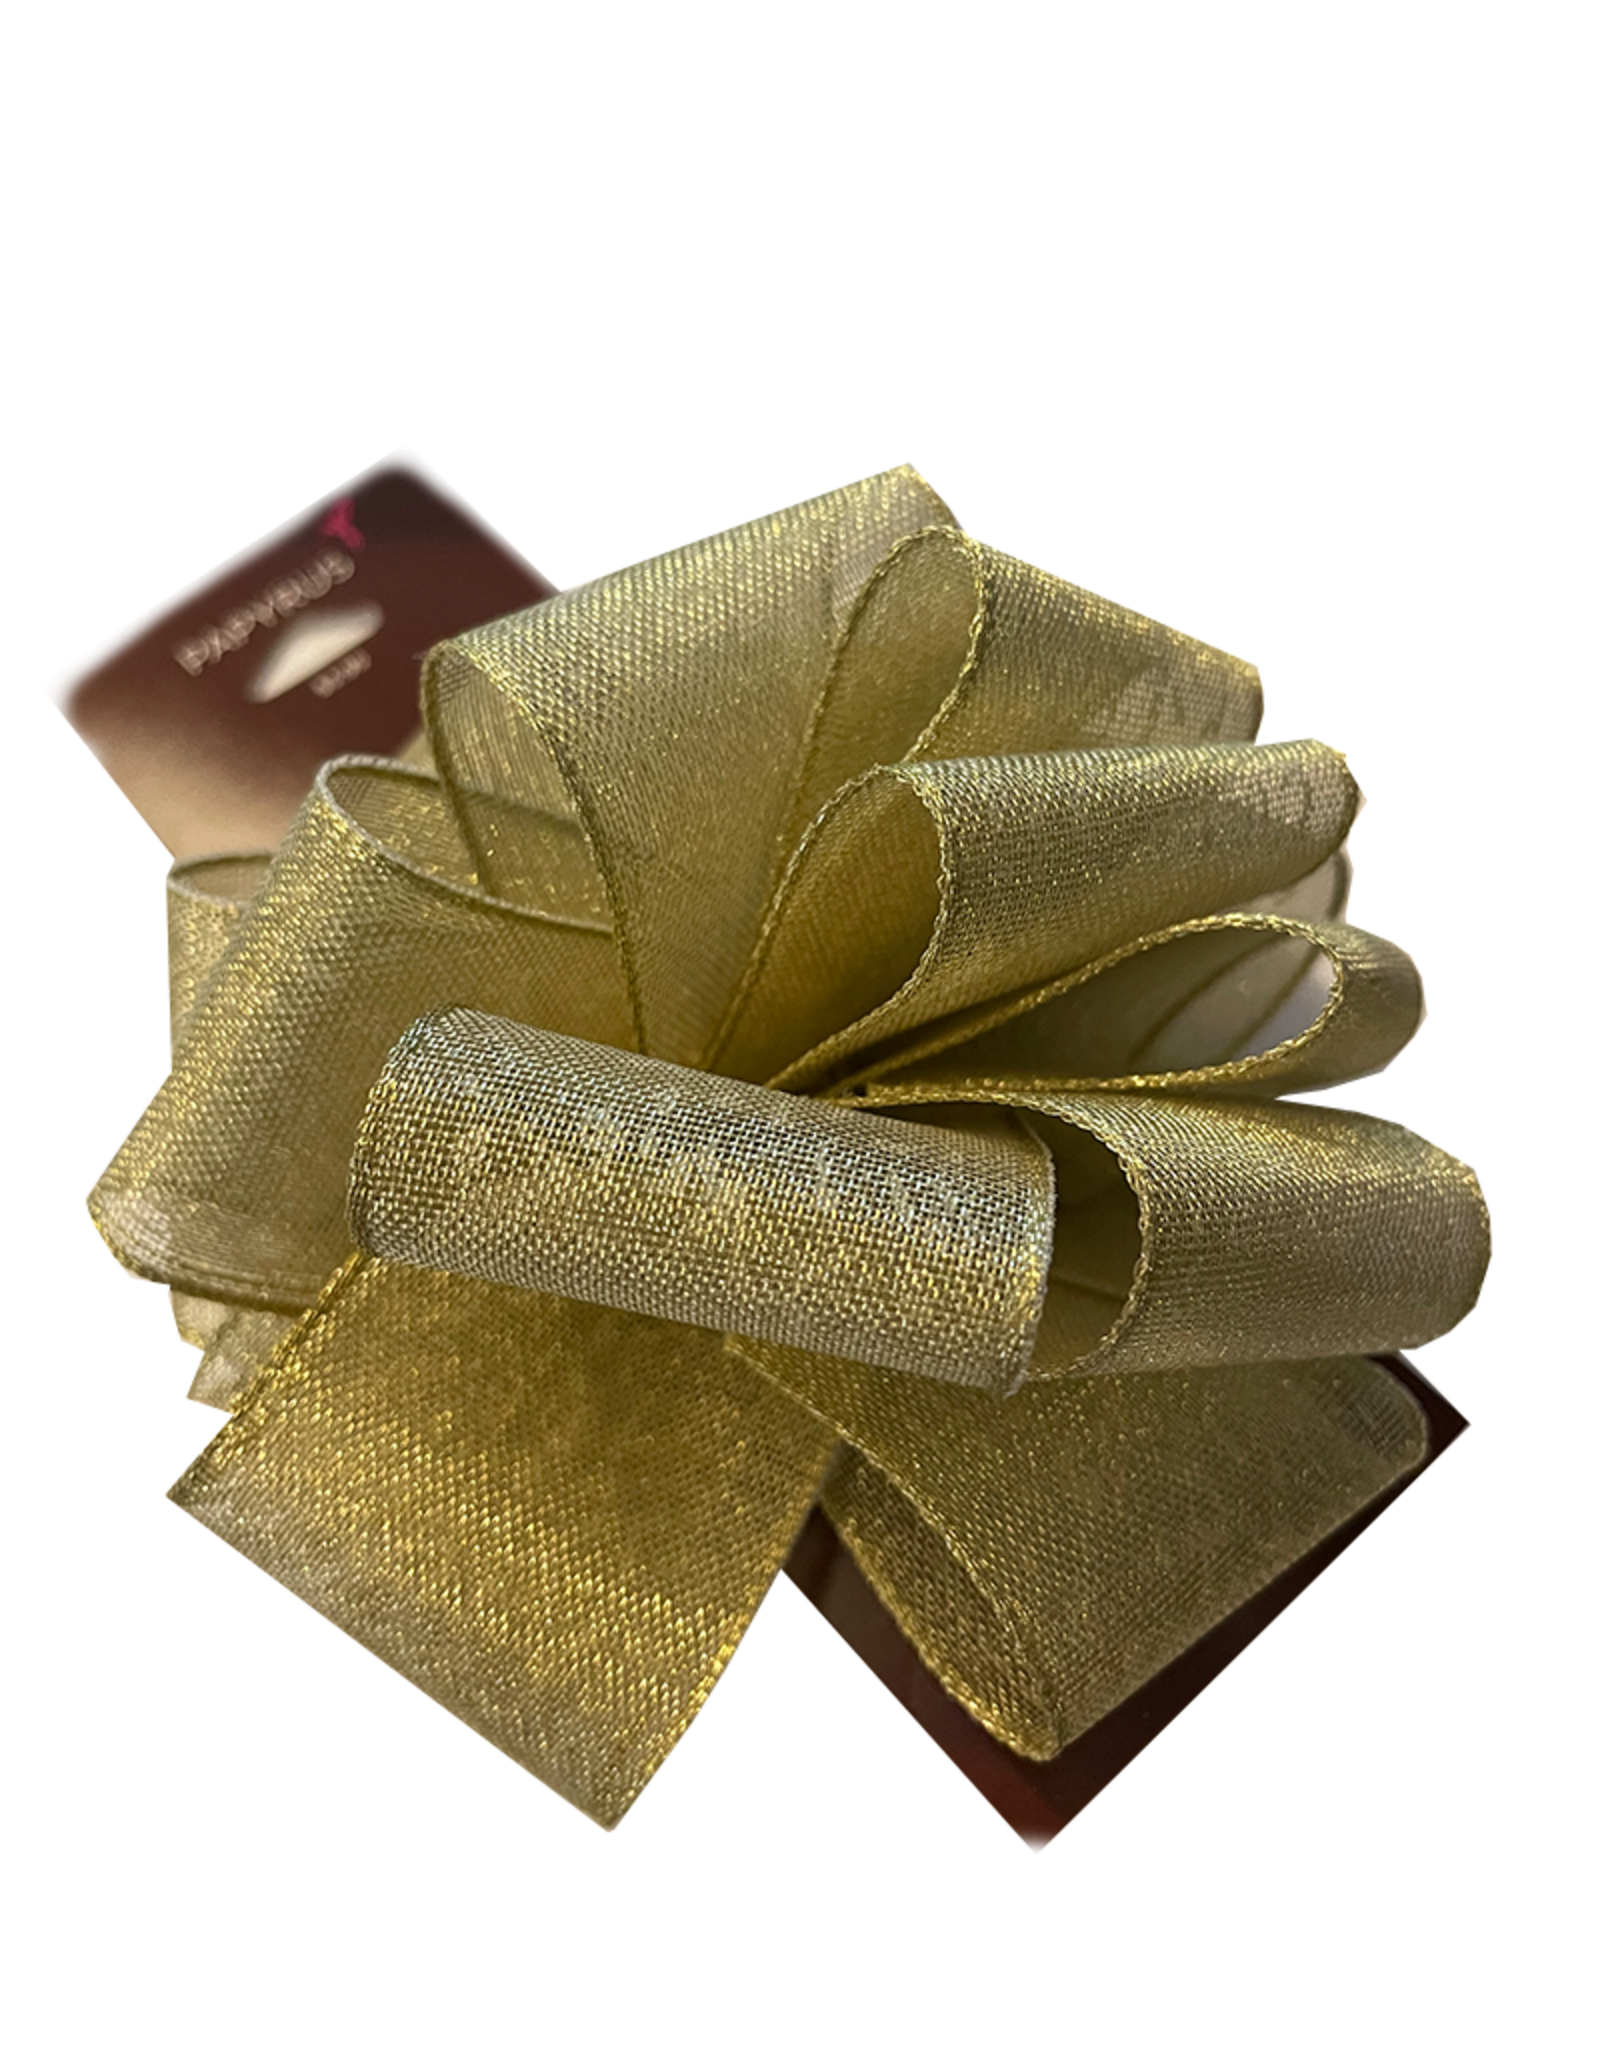 PAPYRUS® Gift Bows Metalic Gold Pom Pom Bow